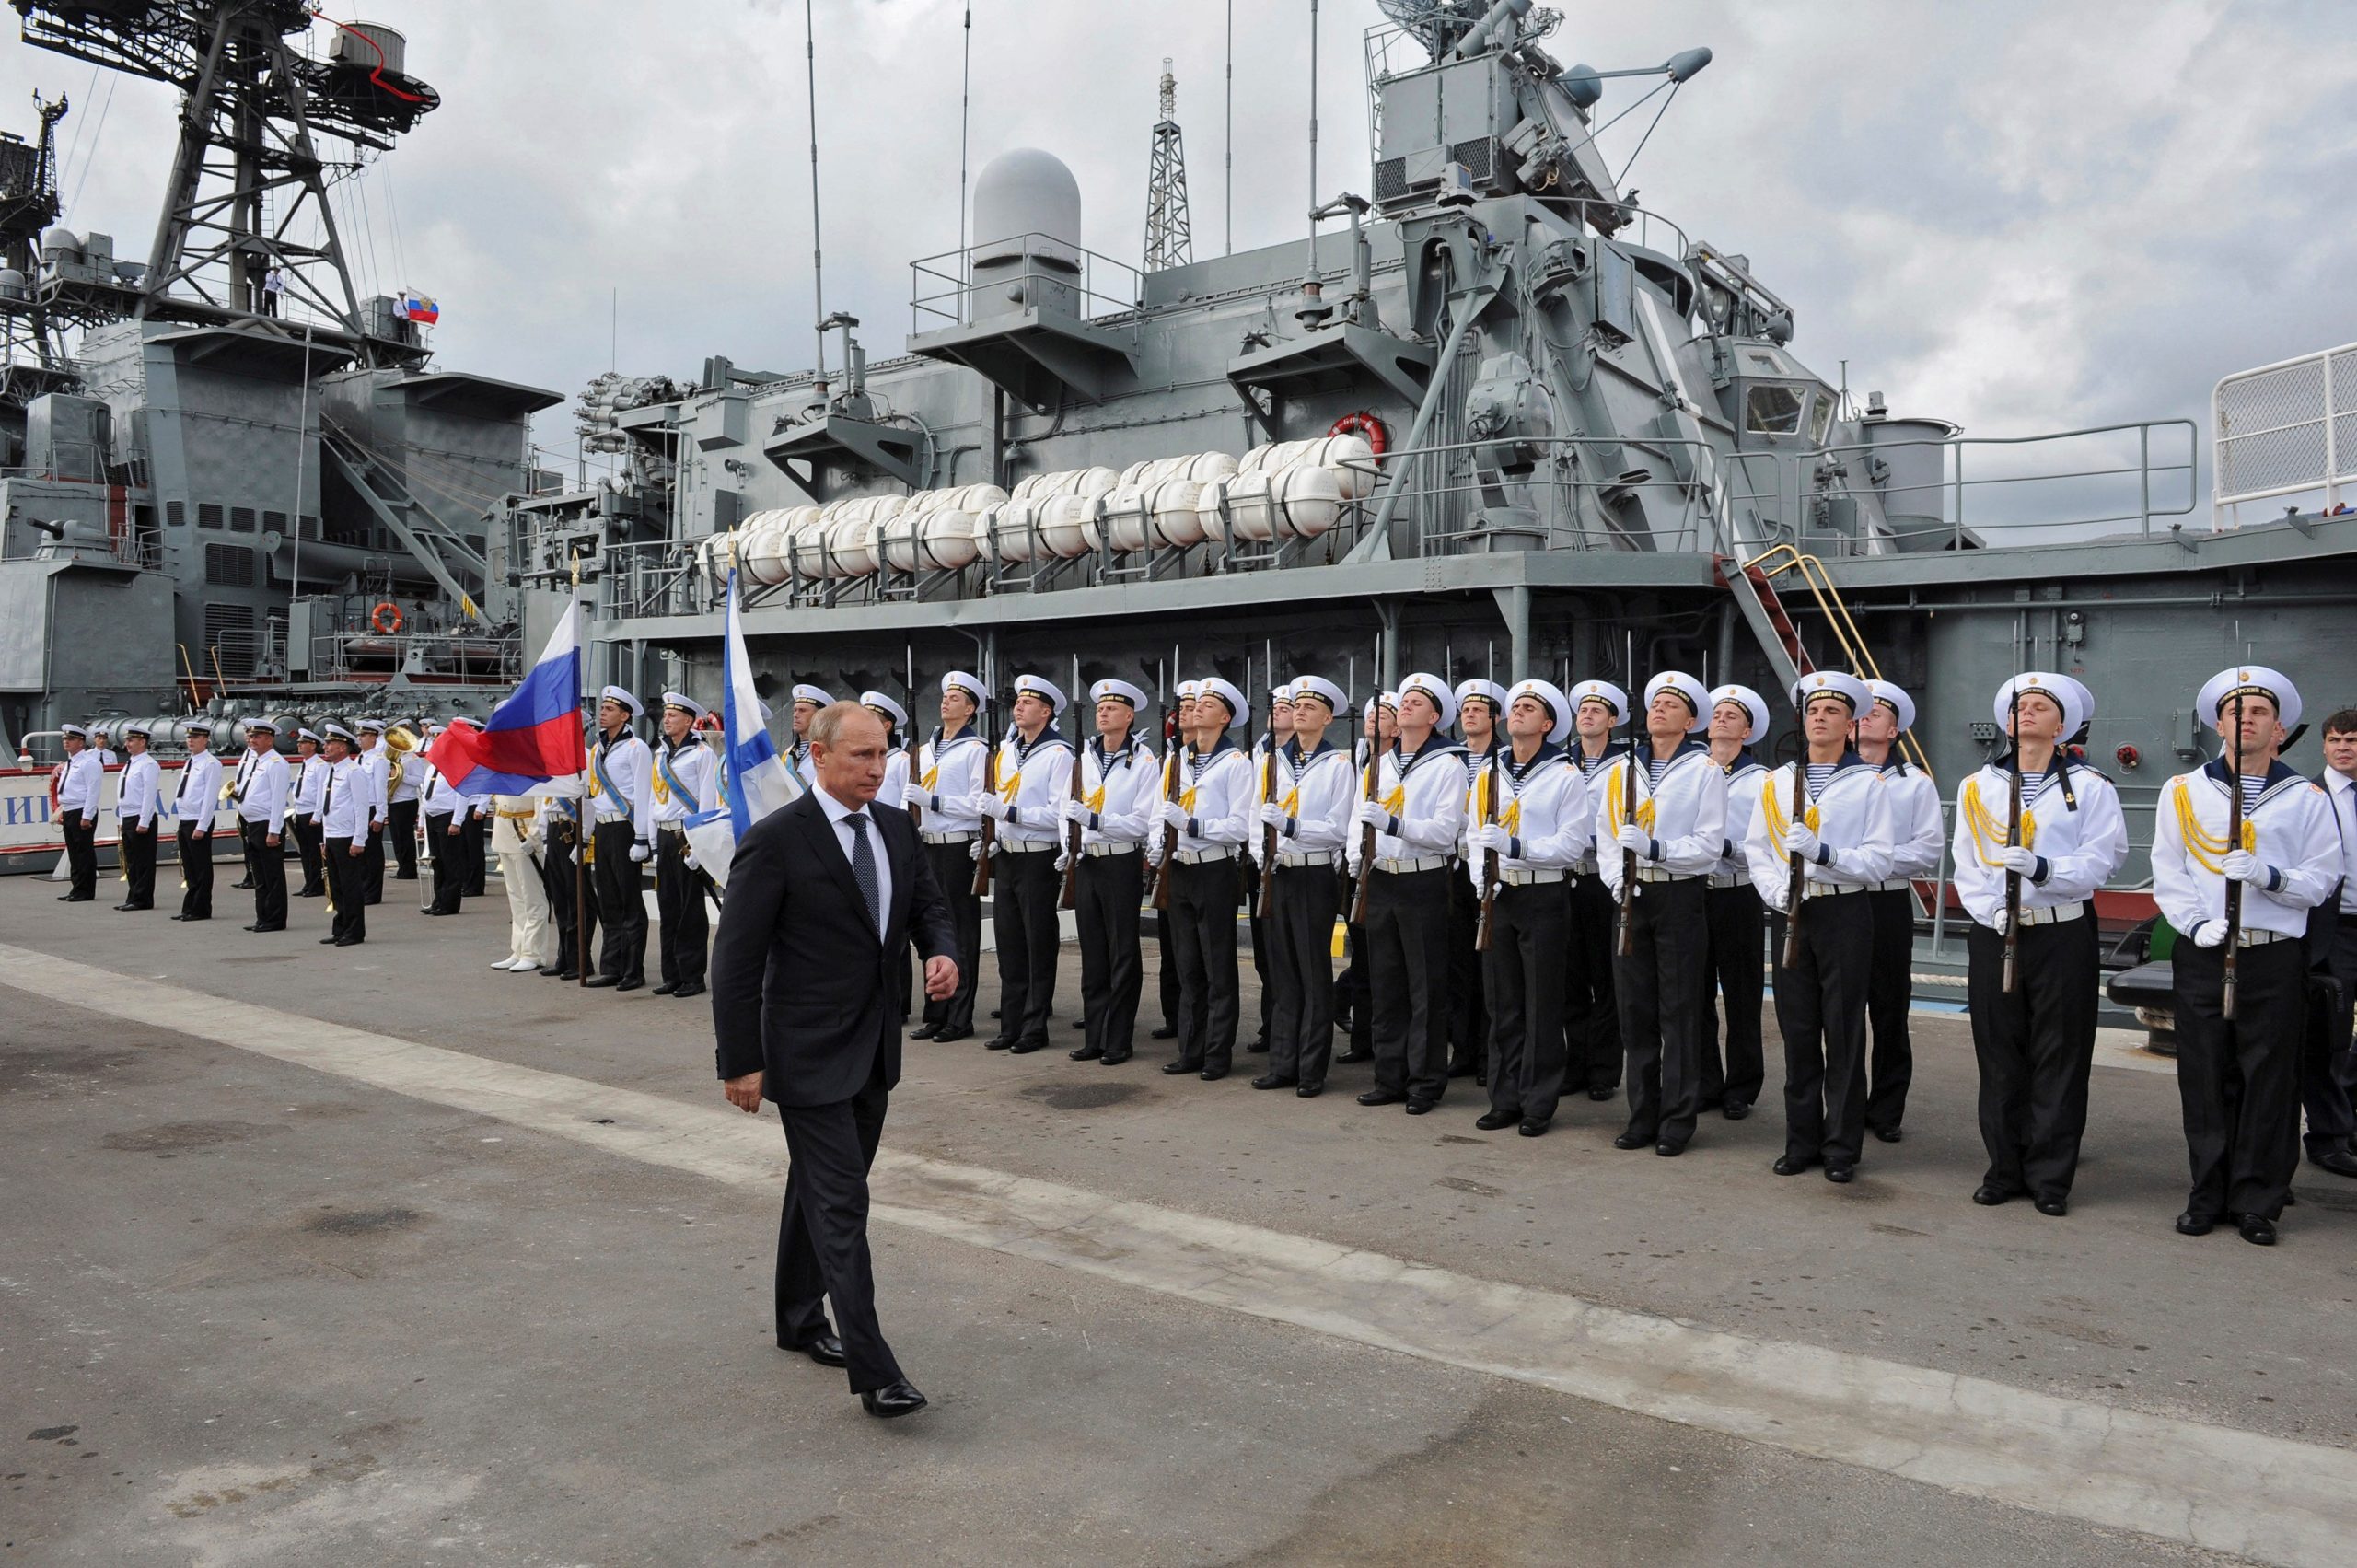 Putin Visits Warship Black Sea Russia